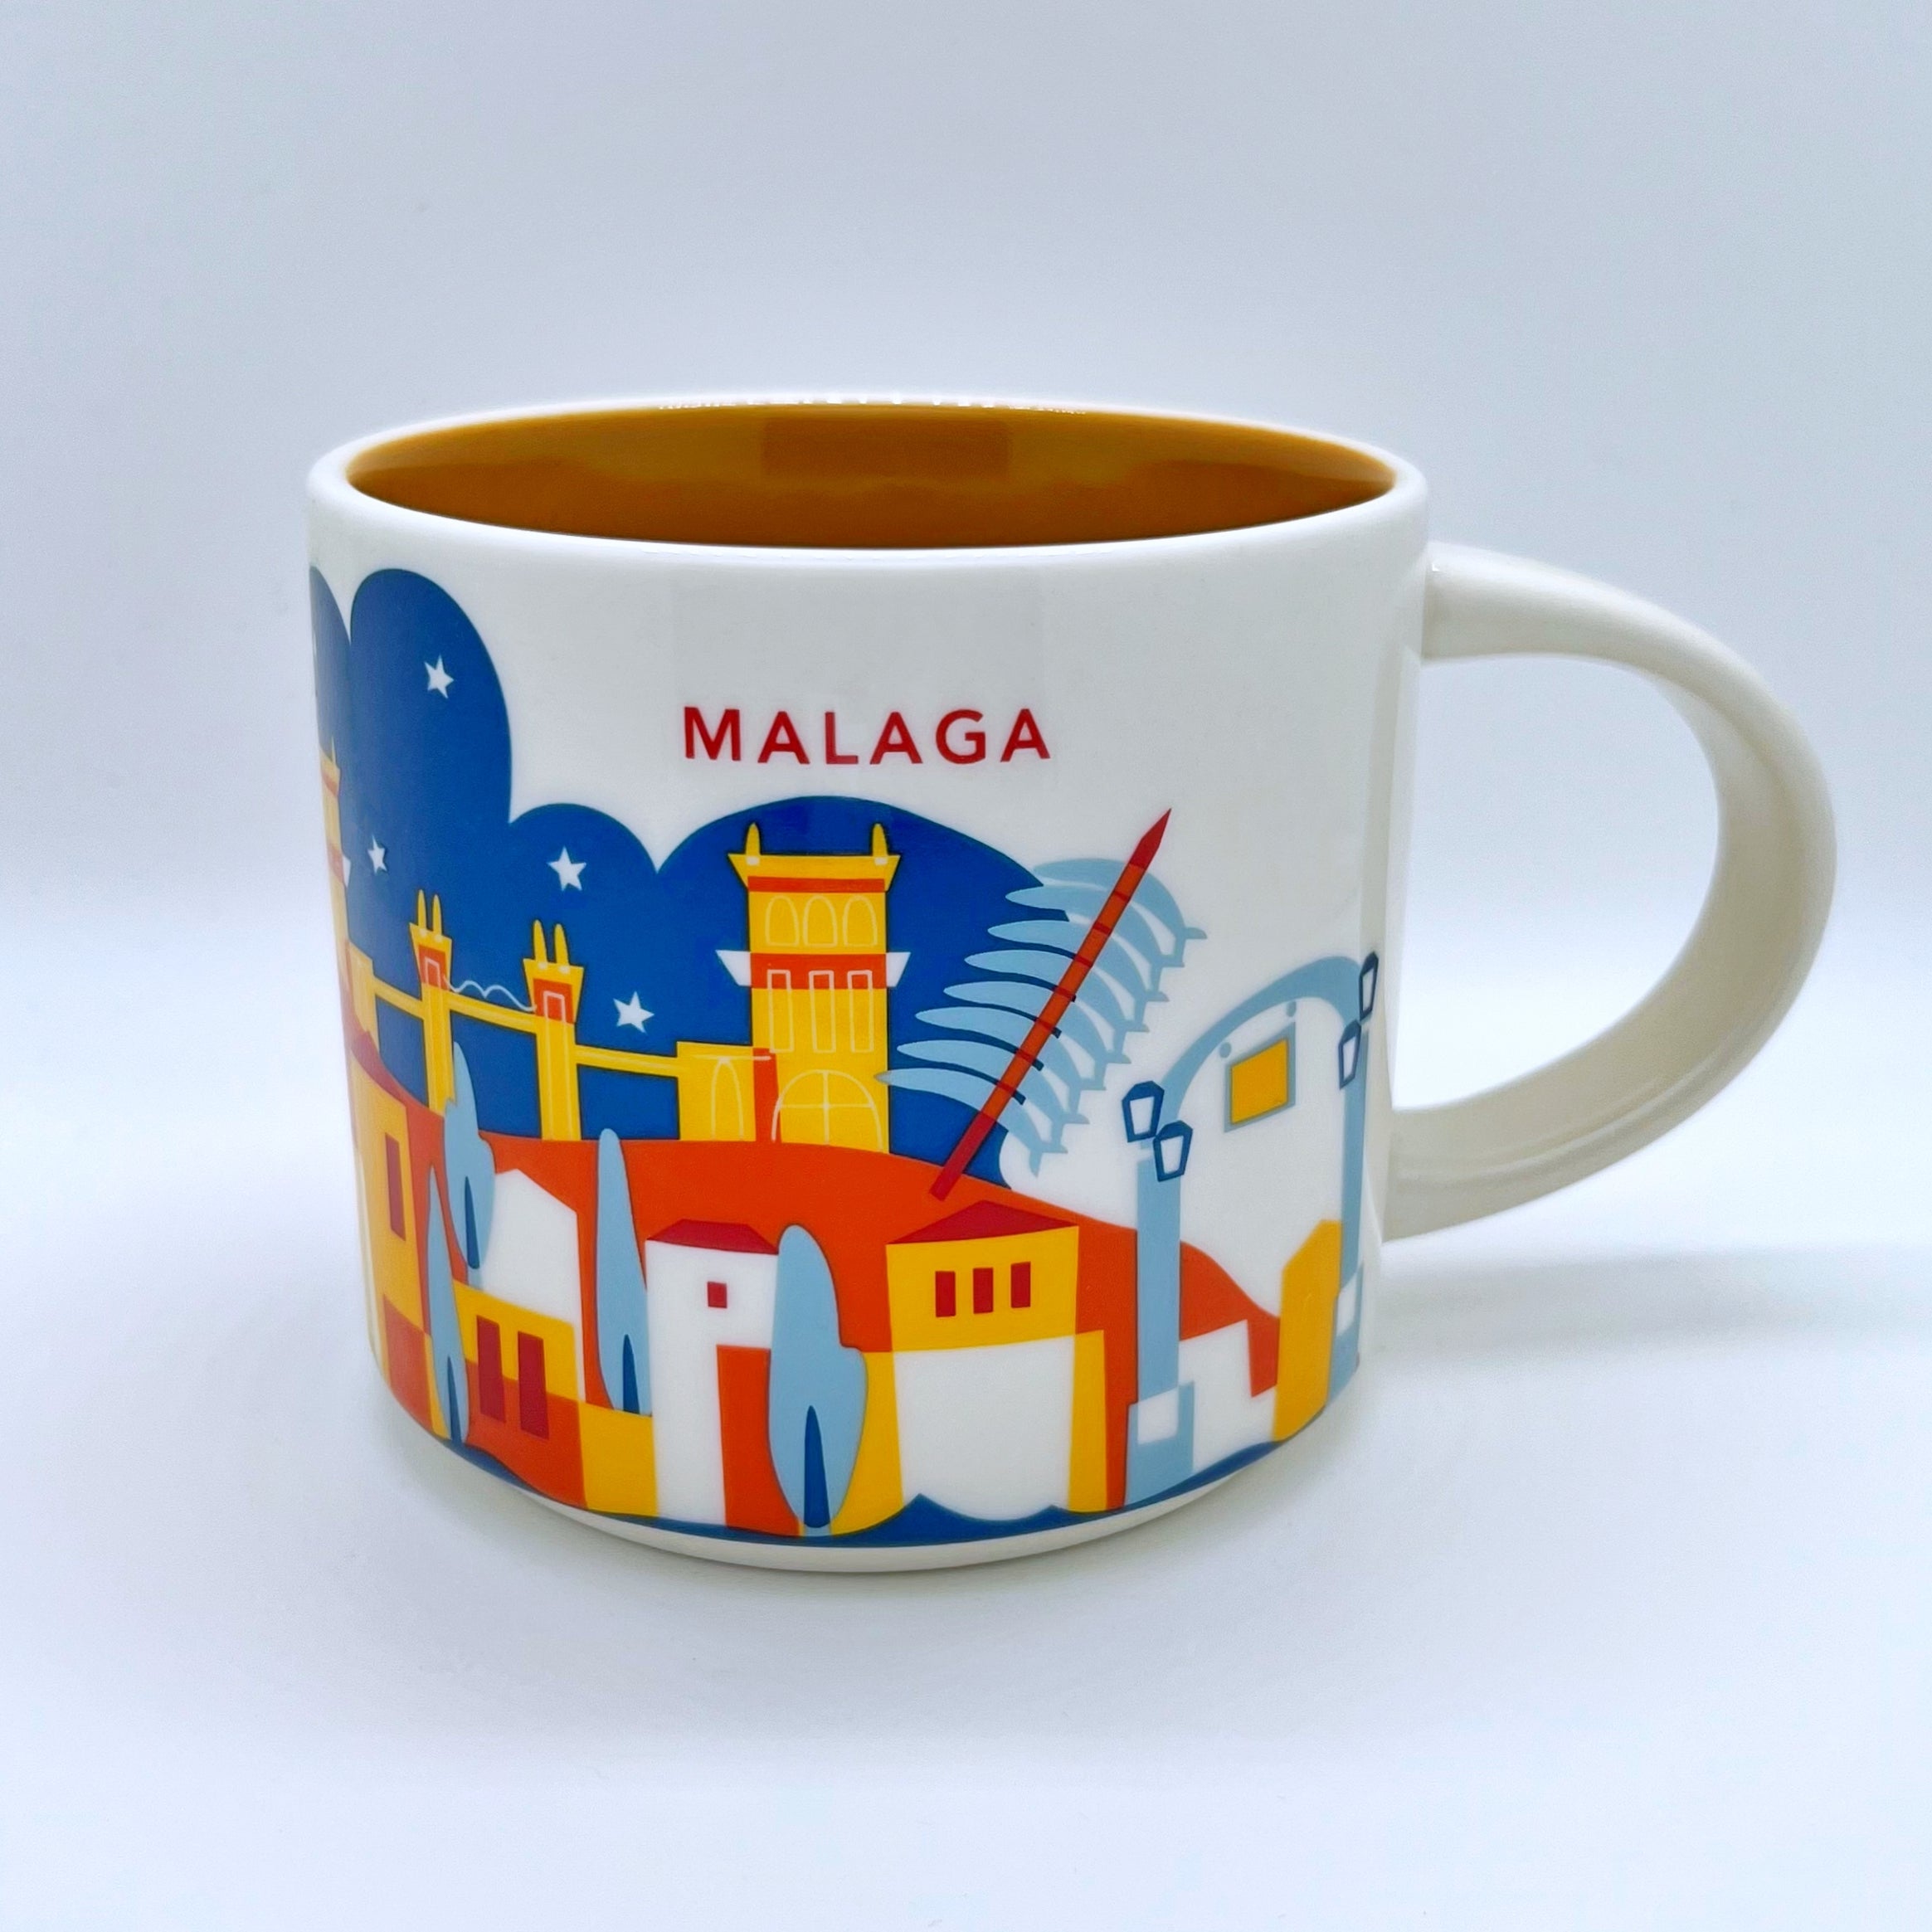 Malaga City Kaffee Tasse